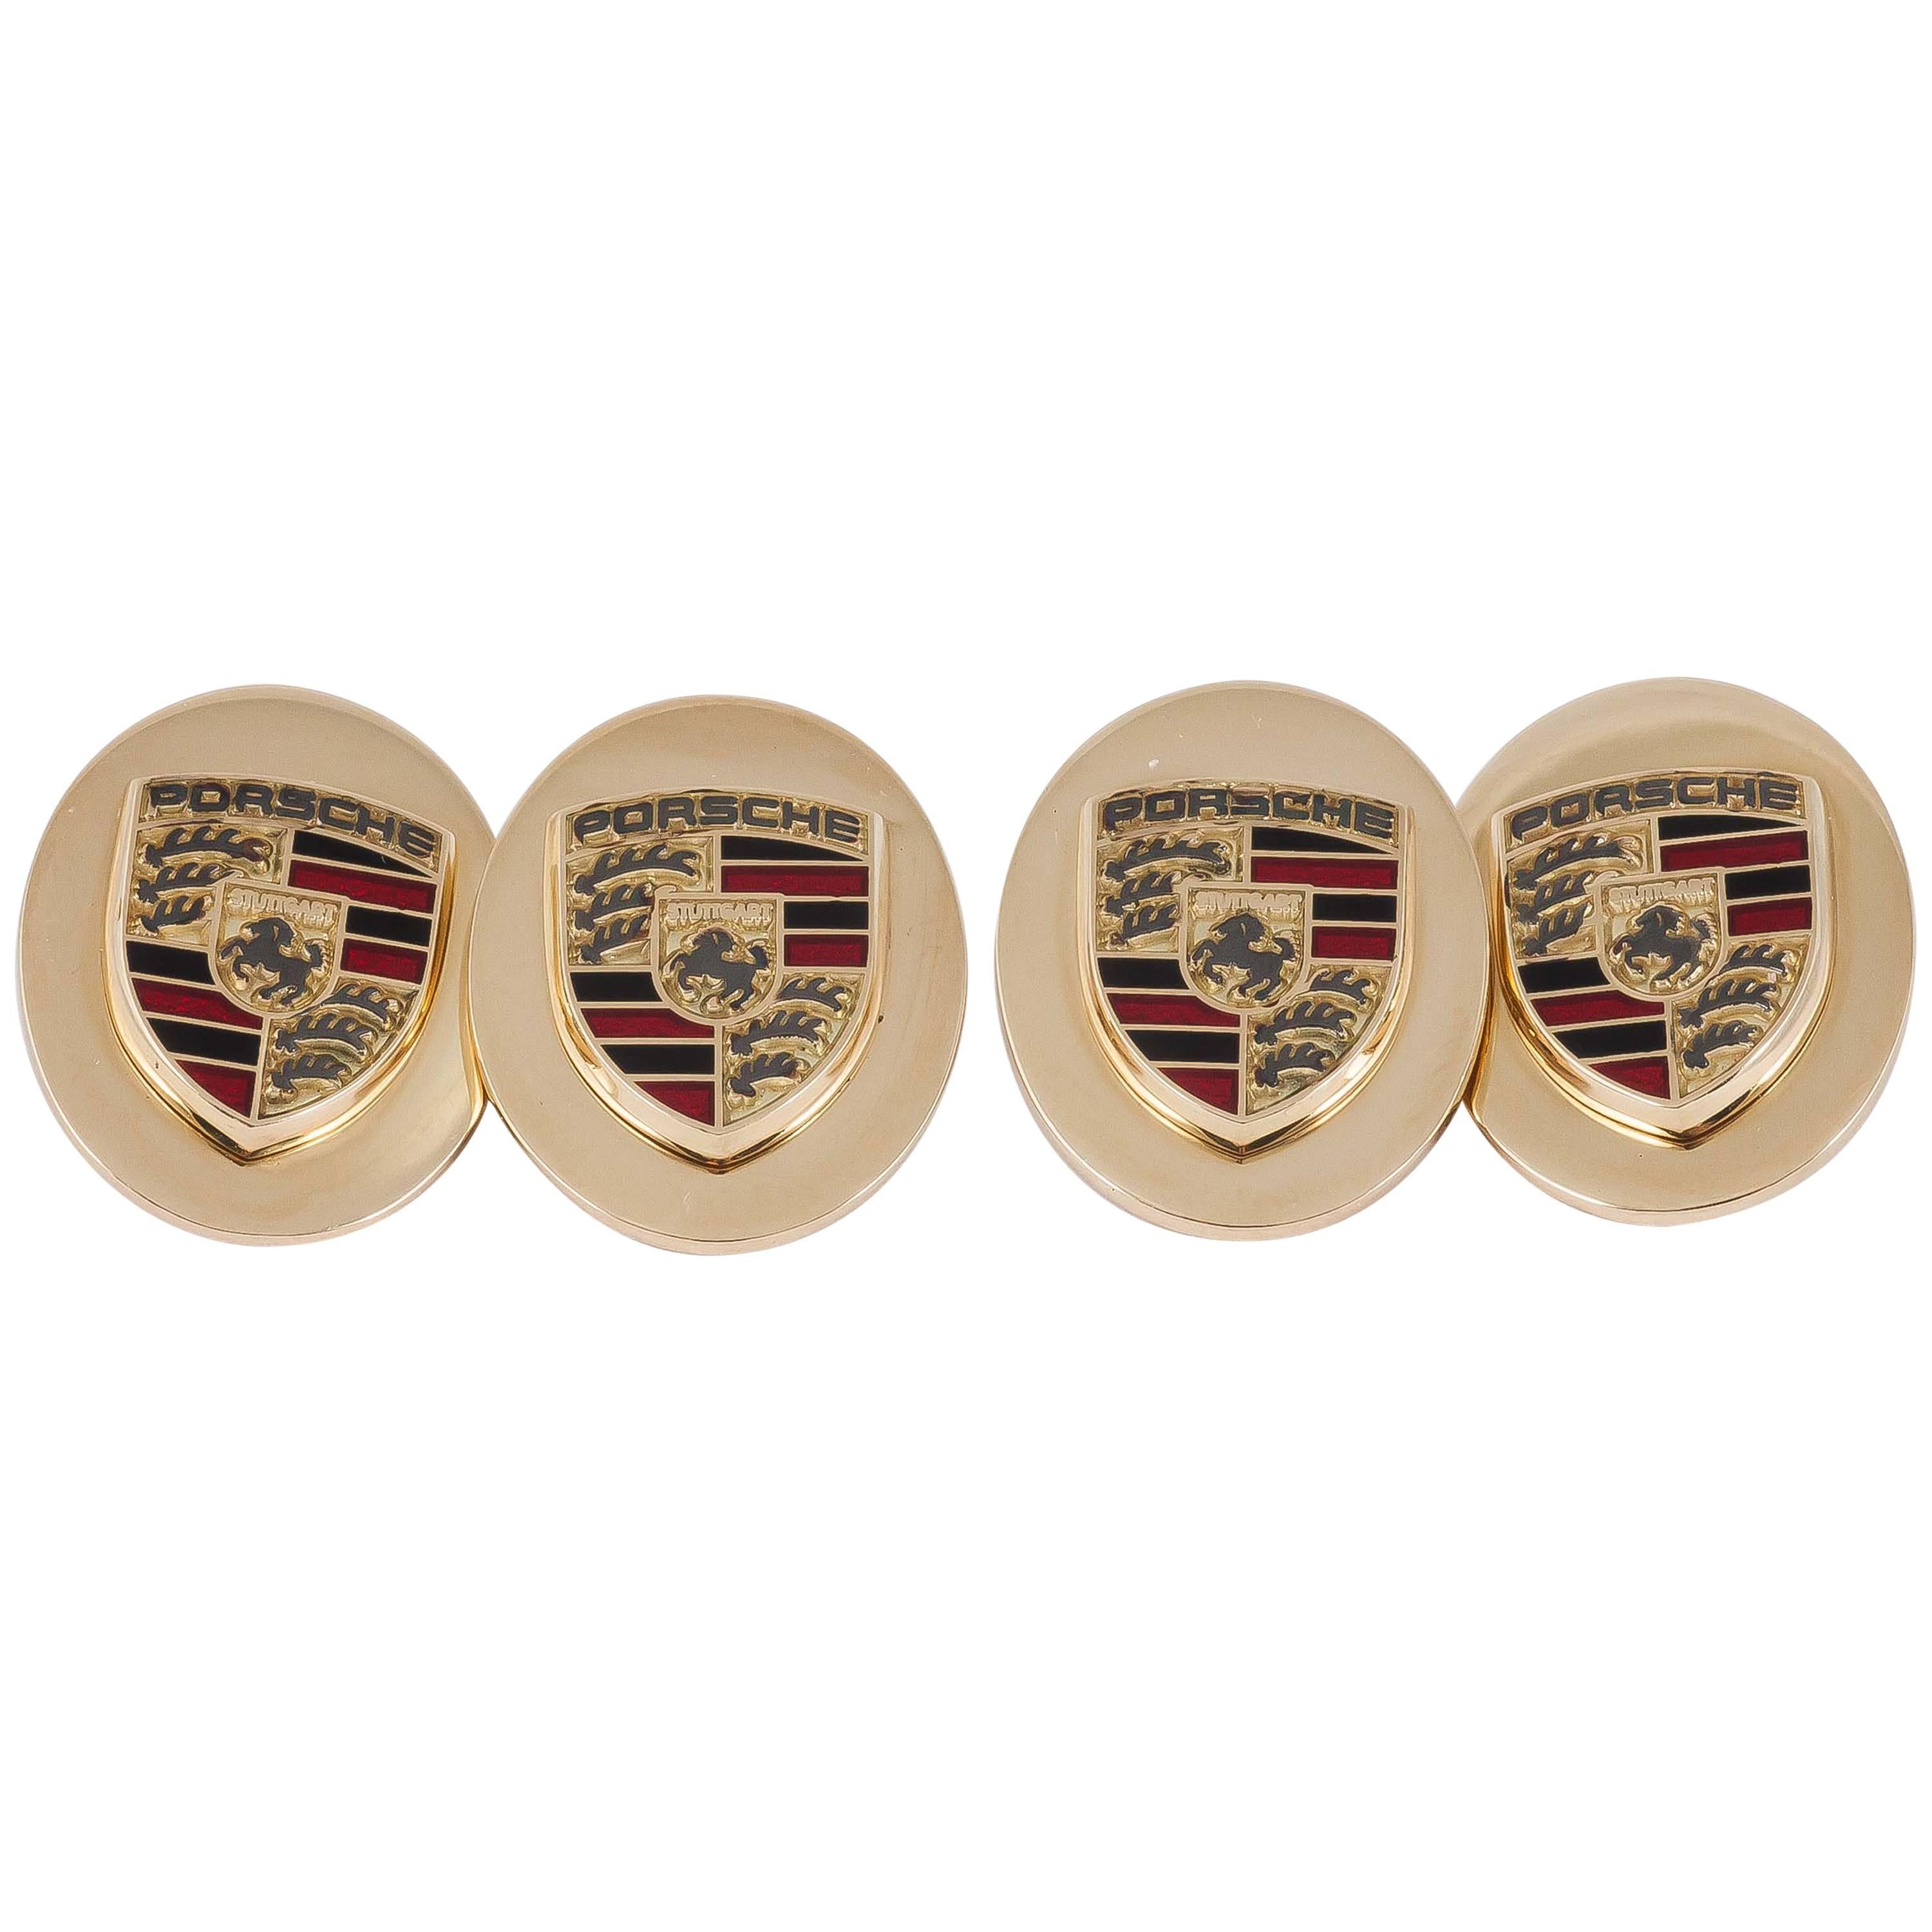 New Porsche Emblem Cufflinks in Heavy Quality 18 Carat Gold, English Made im Angebot